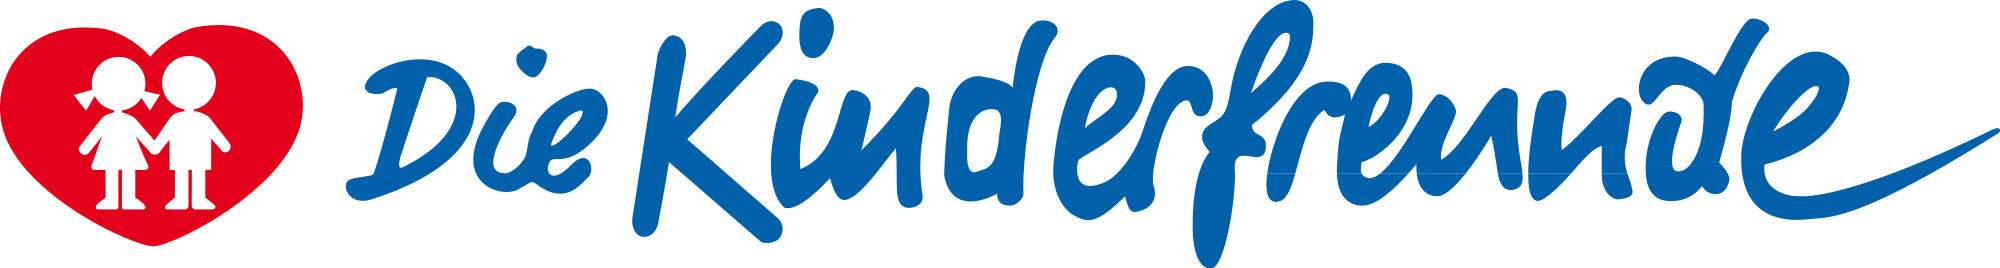 logo_kinderfreunde_2000